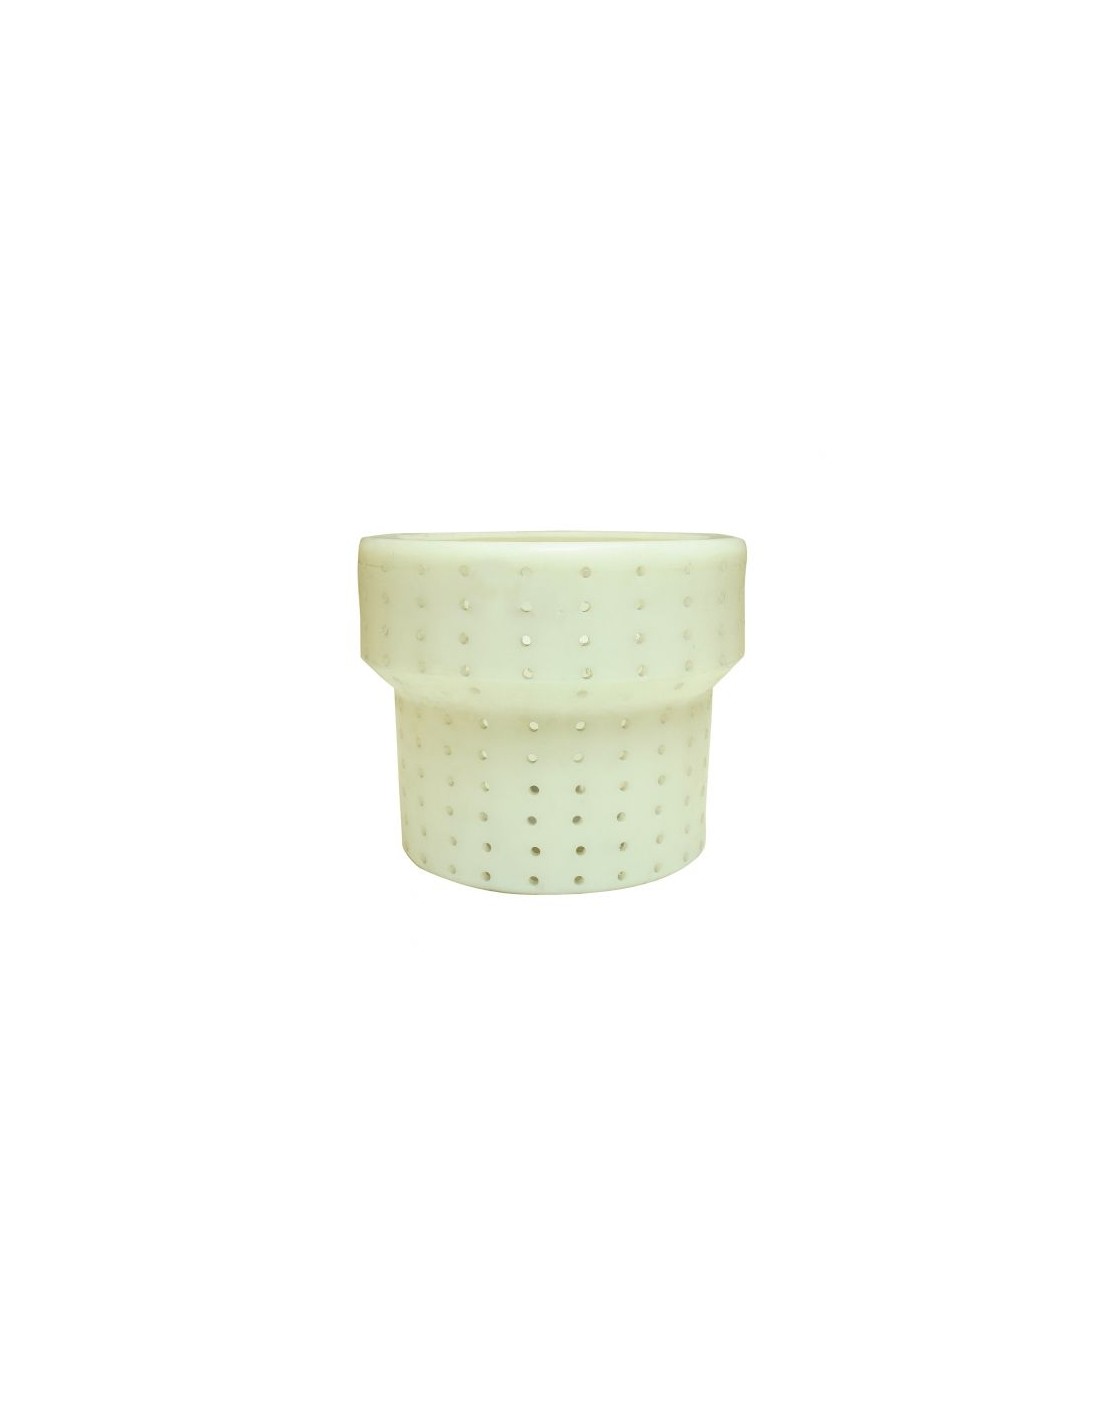 Plastic drip basket for centrifuge - Dimensions Ø cm 31 x 35.5